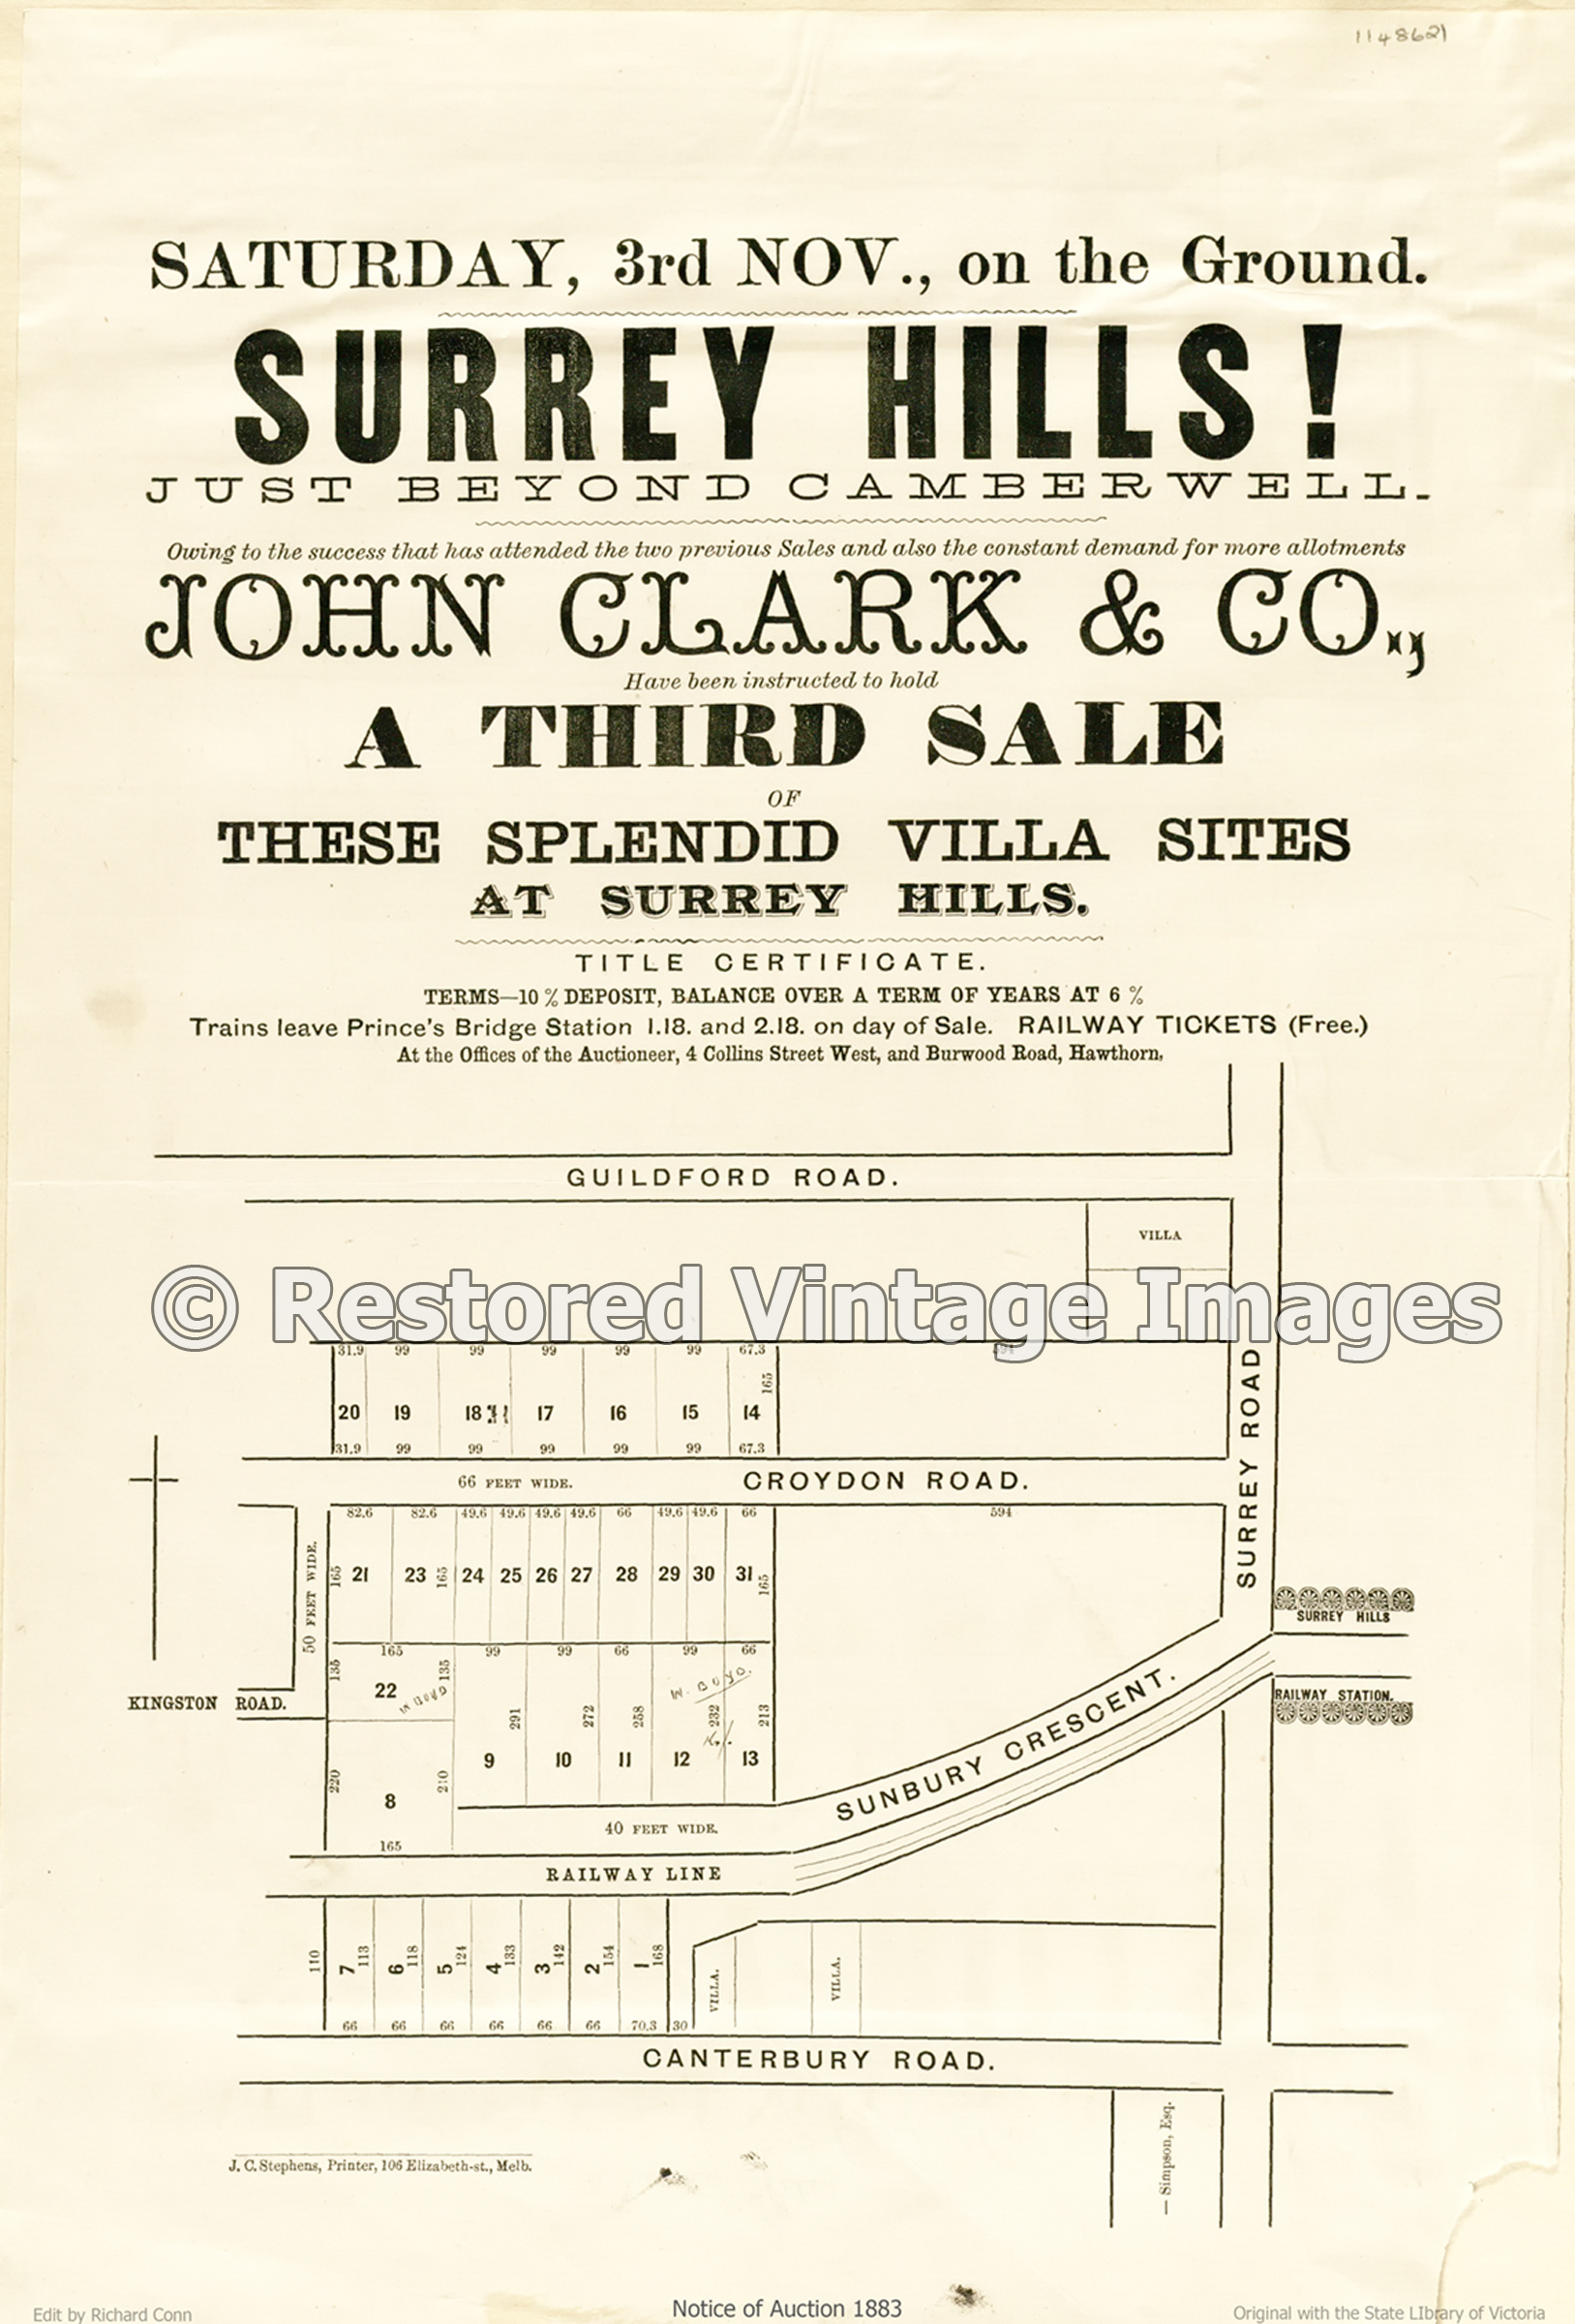 Surrey Hills – “Just Beyond Camberwell” 1883